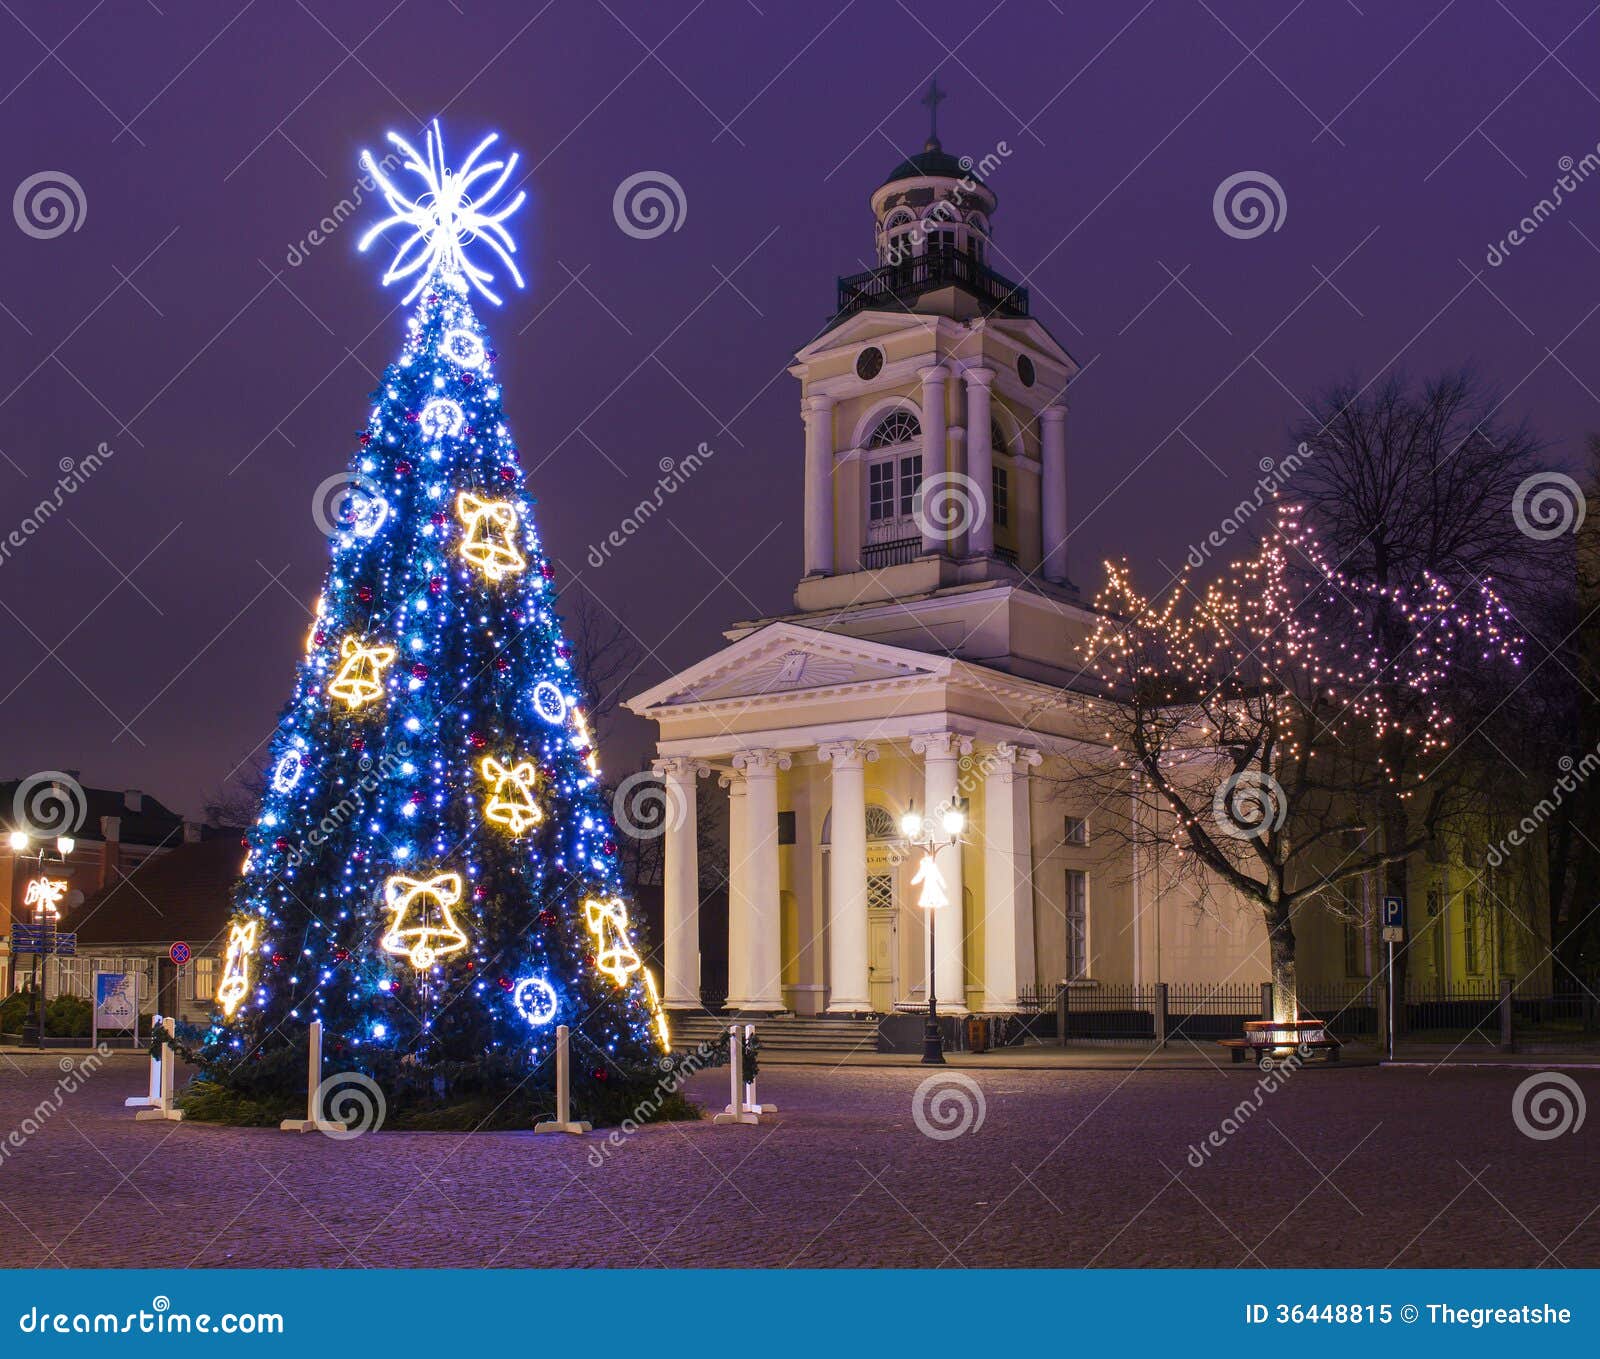 673 Christmas Church Bells Stock Photos - Free & Royalty-Free